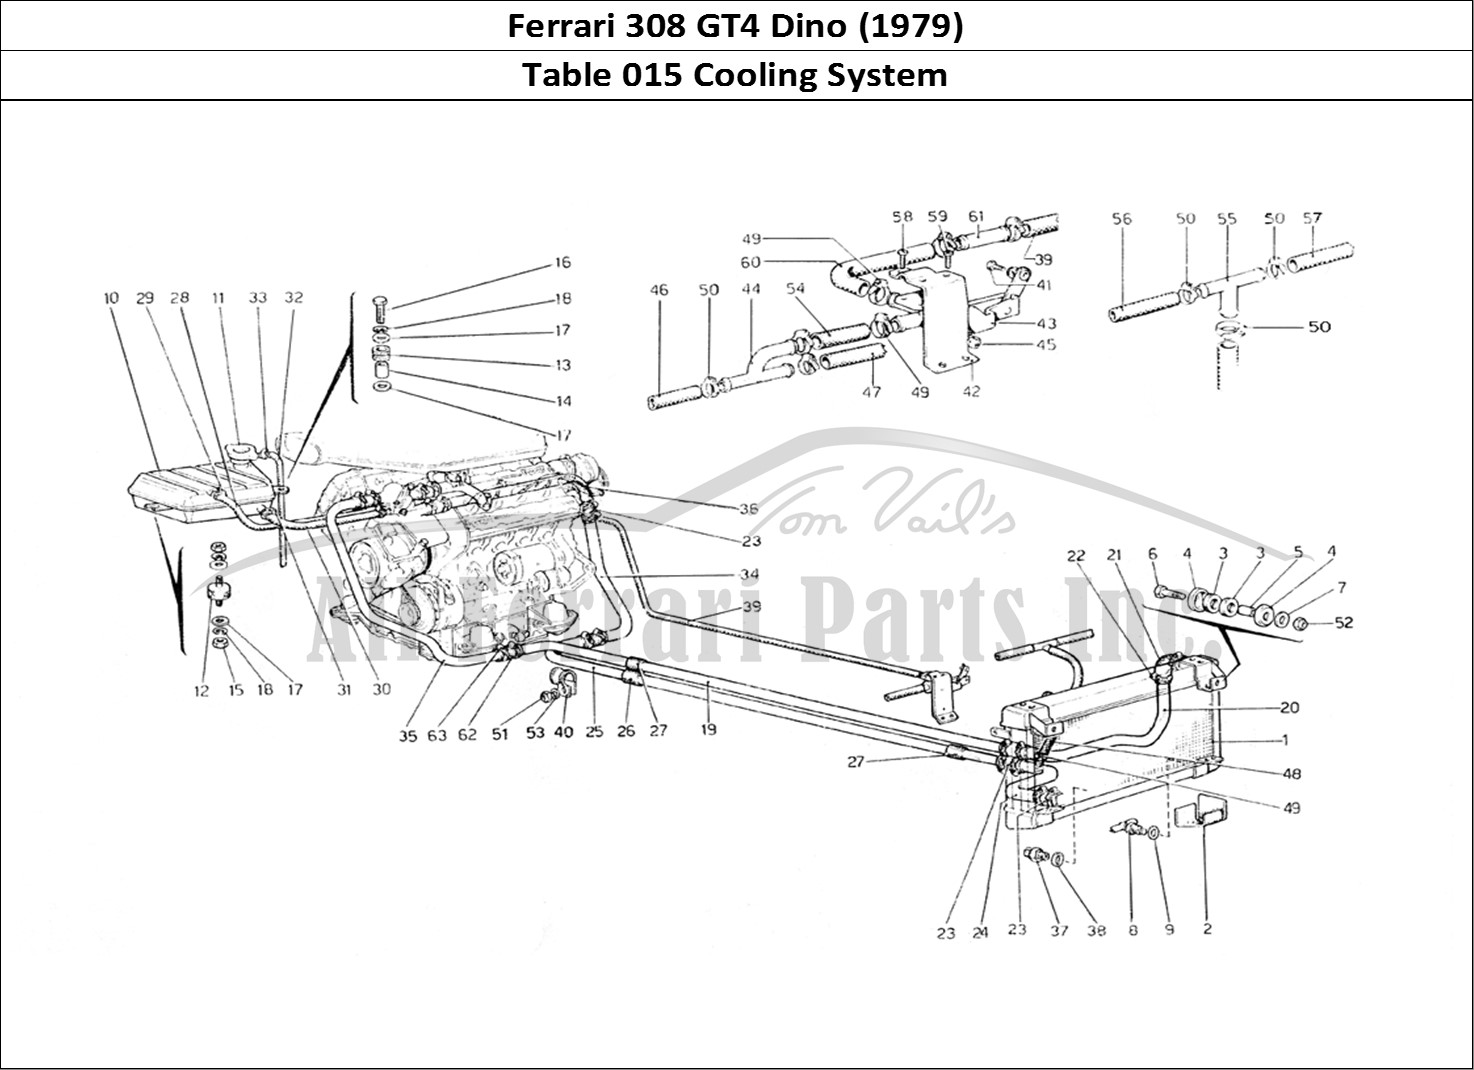 Ferrari Parts Ferrari 308 GT4 Dino (1979) Page 015 Cooling System